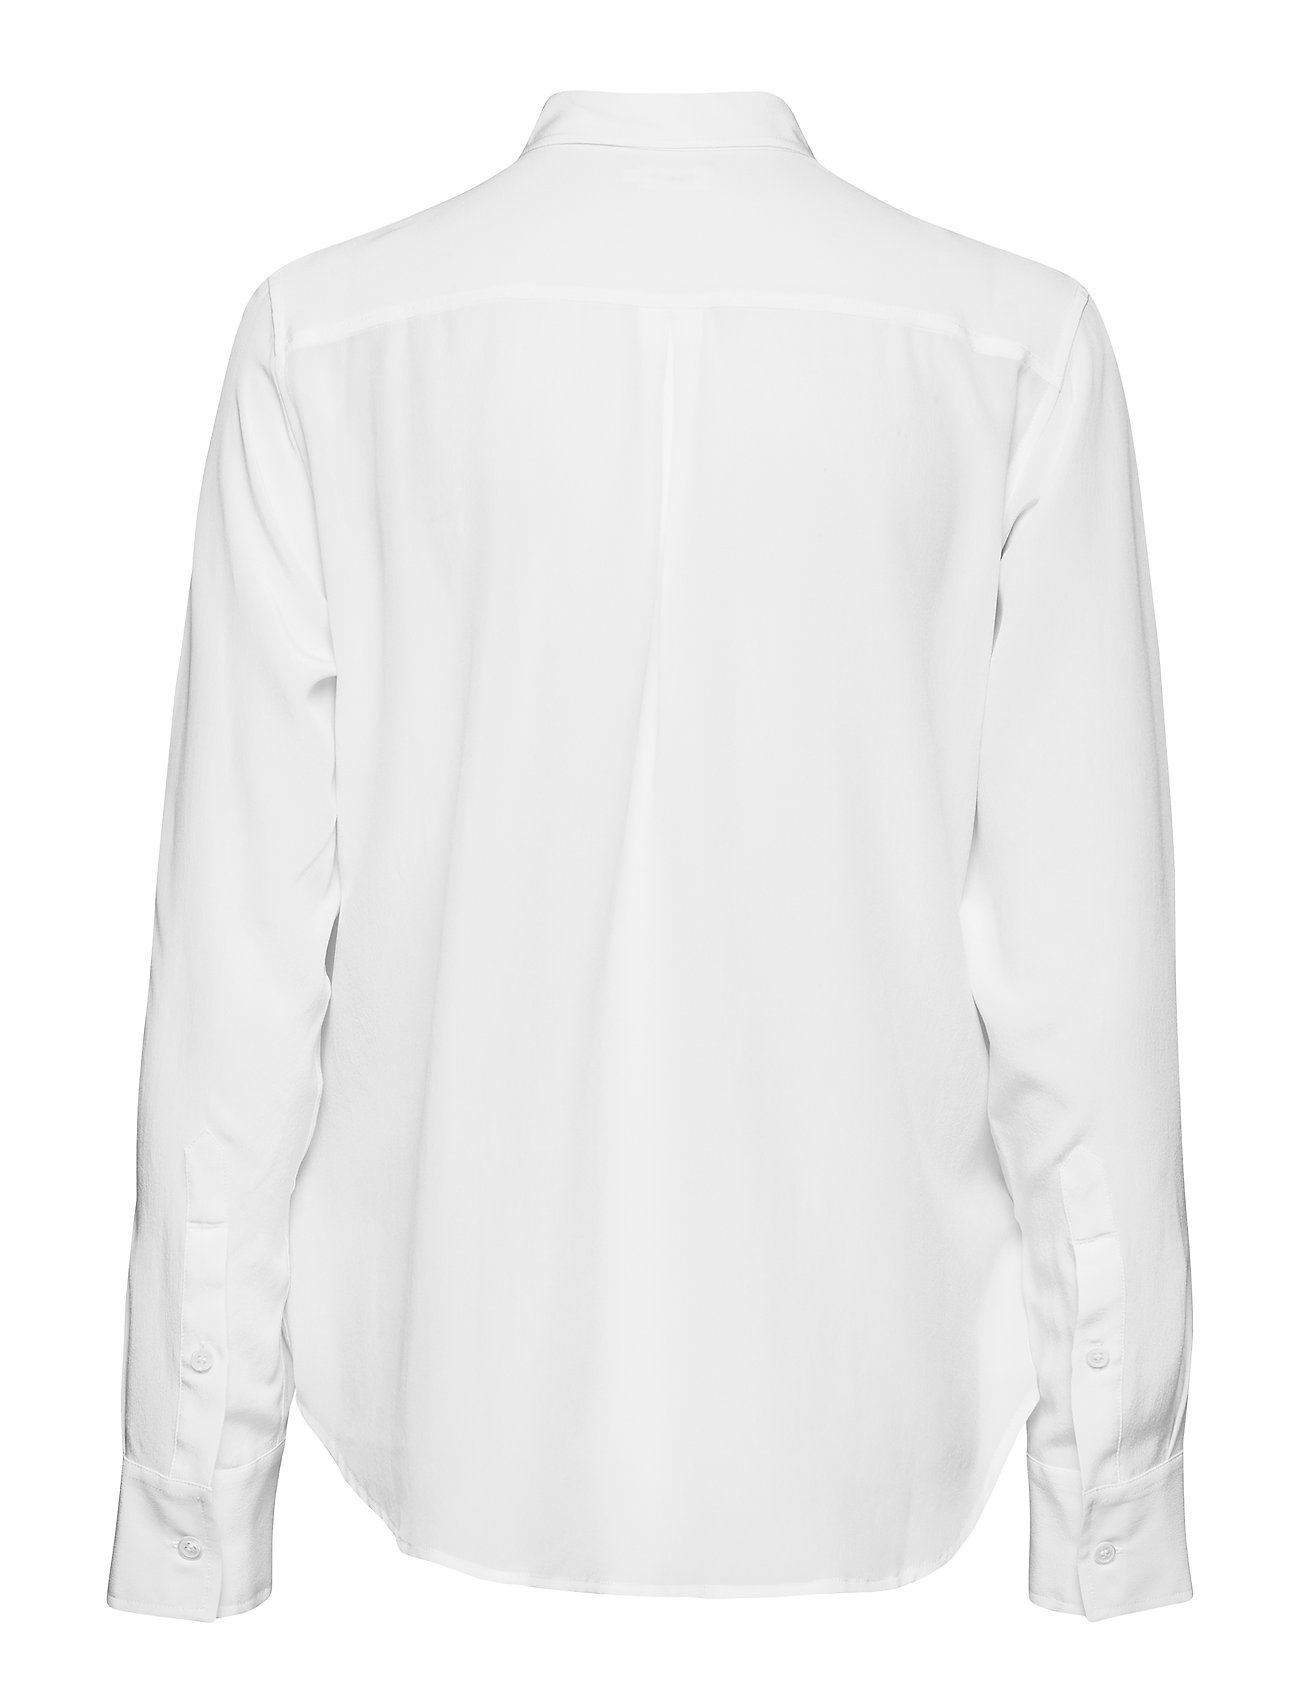 Sort Filippa K Shirt Langærmet Skjorte Hvid Filippa K langærmede skjorter for dame - Pashion.dk